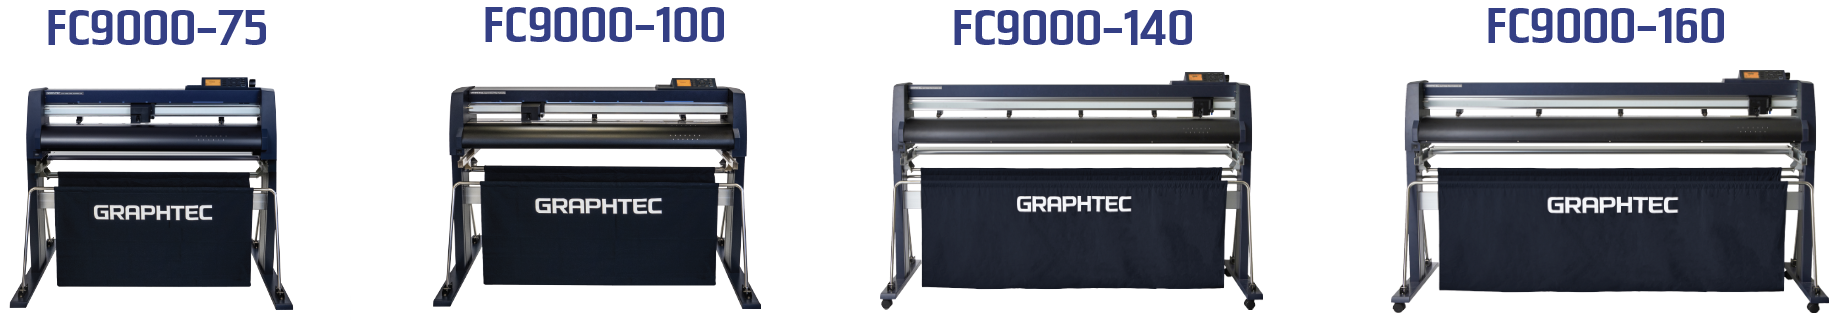 FC9000 Serie | Graphtec America, Inc